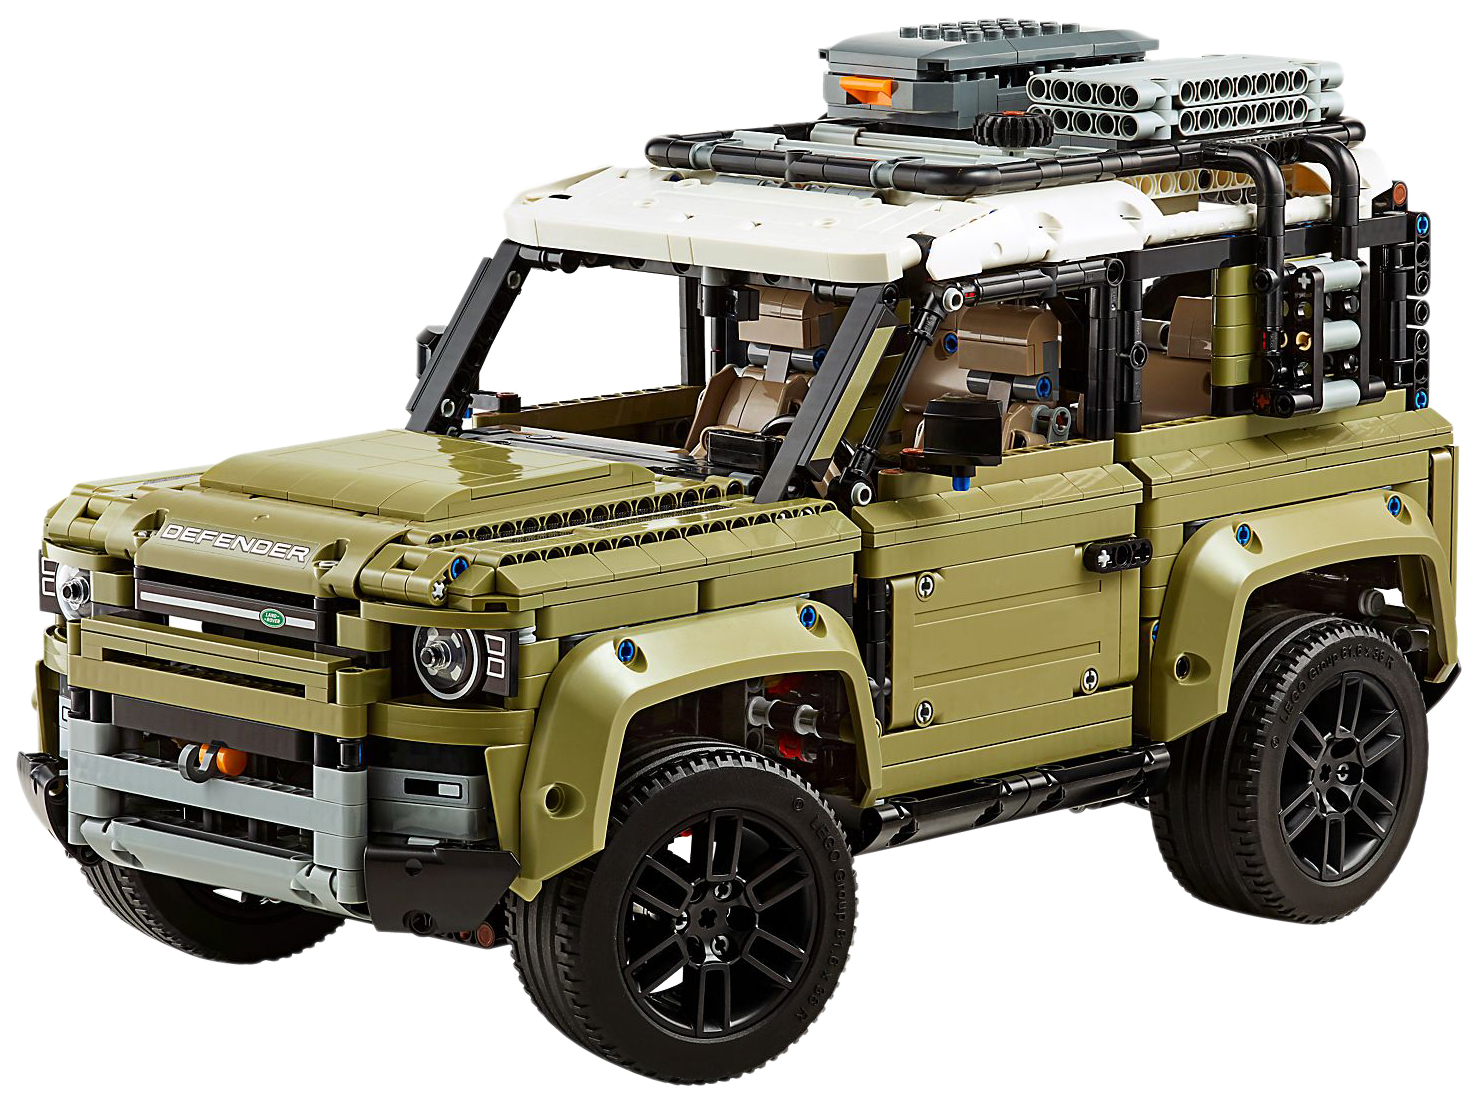 Конструктор LEGO Technic Land Rover Defender, 2573, 42110